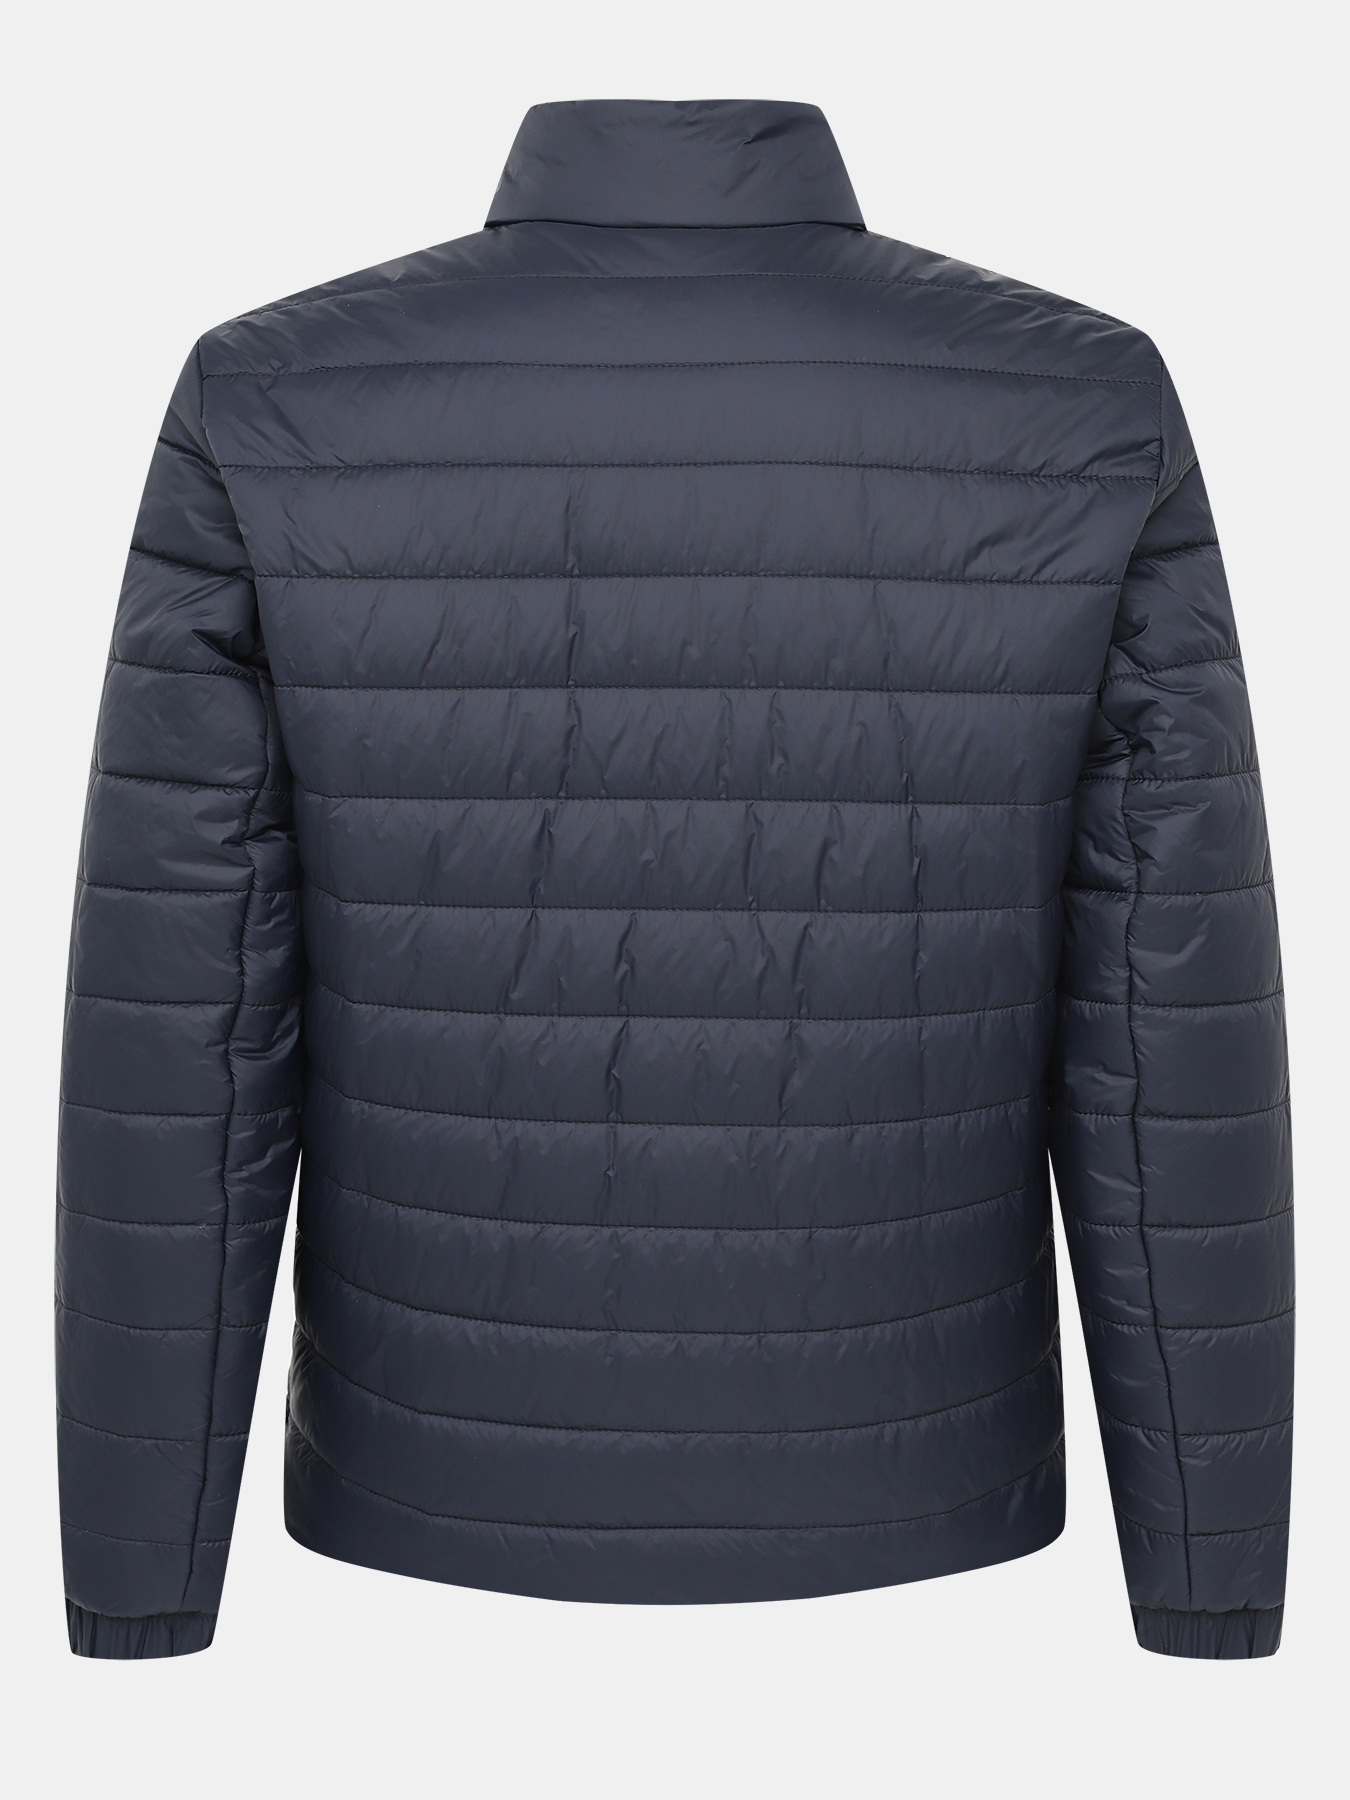 Куртка Benti HUGO 421240-043, цвет темно-синий, размер 48-50 - фото 2